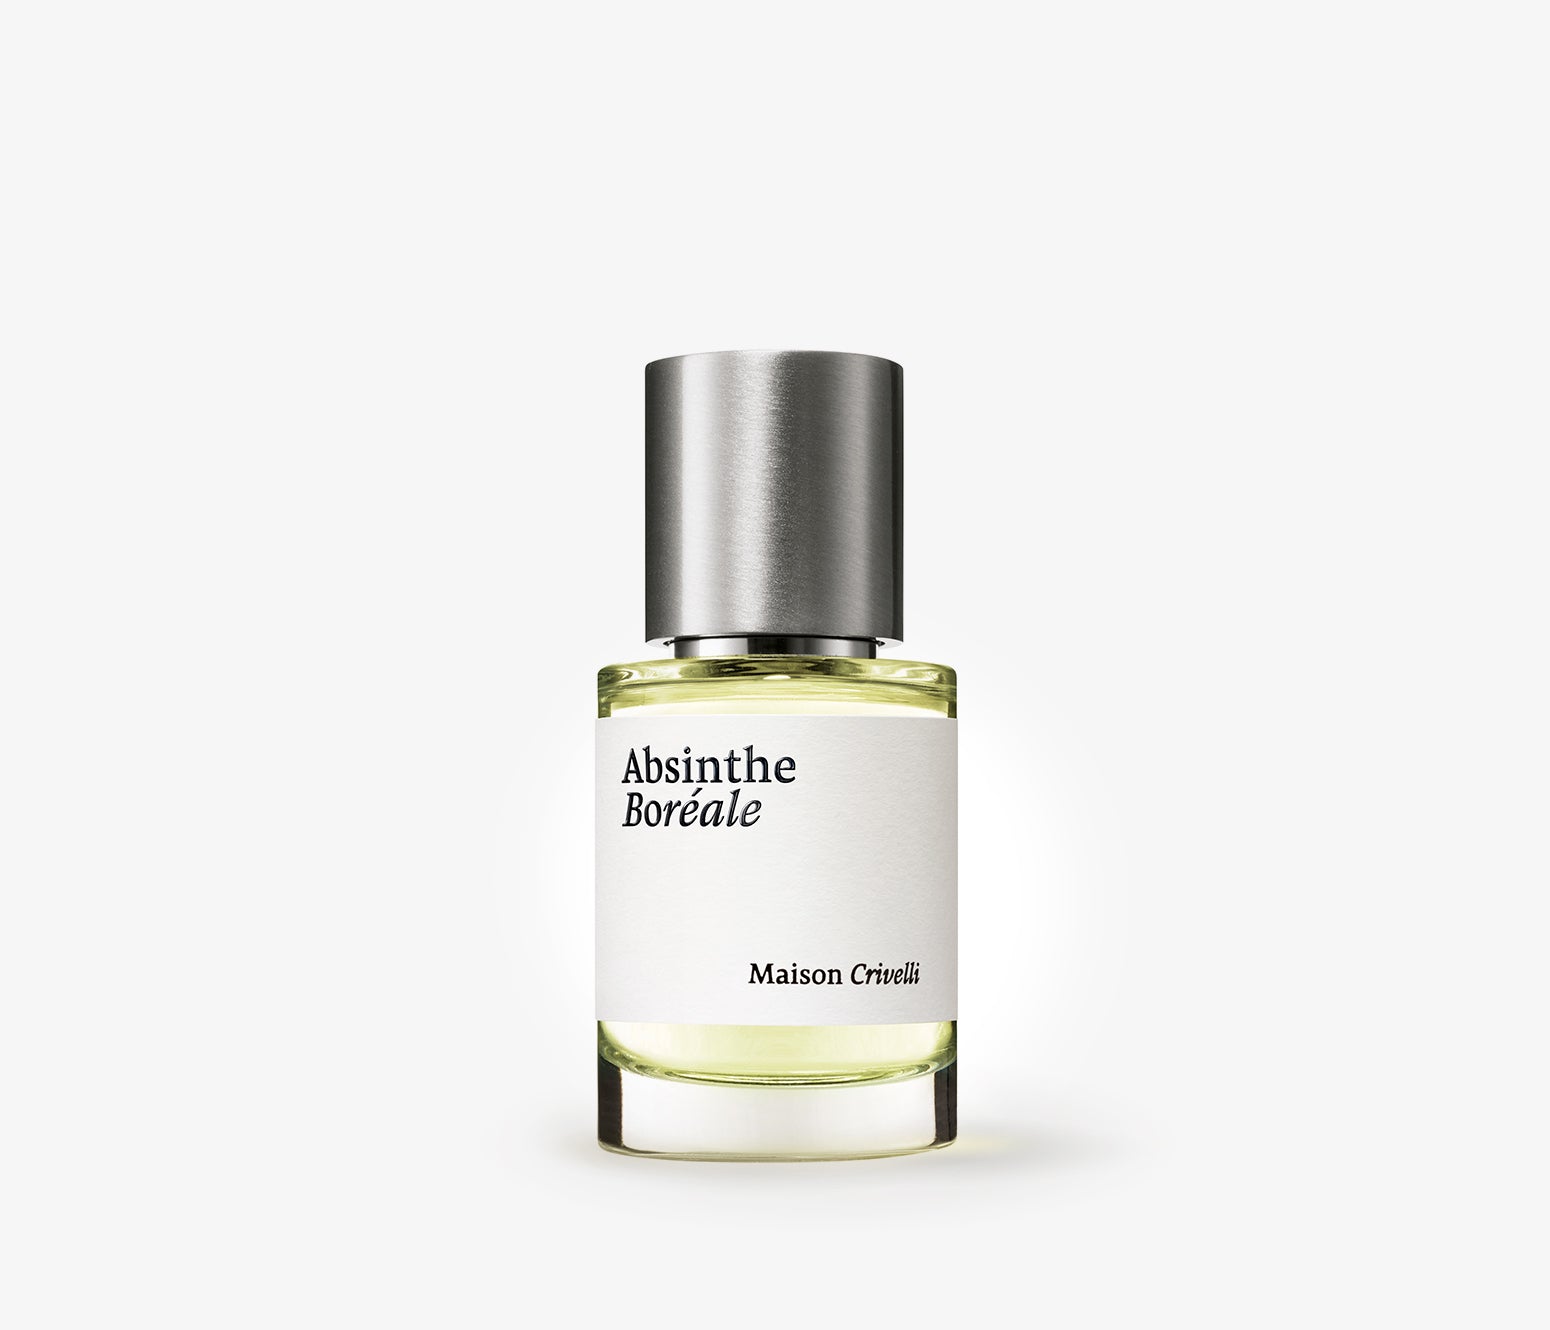 Maison Crivelli - Absinthe Boreale - 30ml - Product Image - Fragrance - Les Senteurs